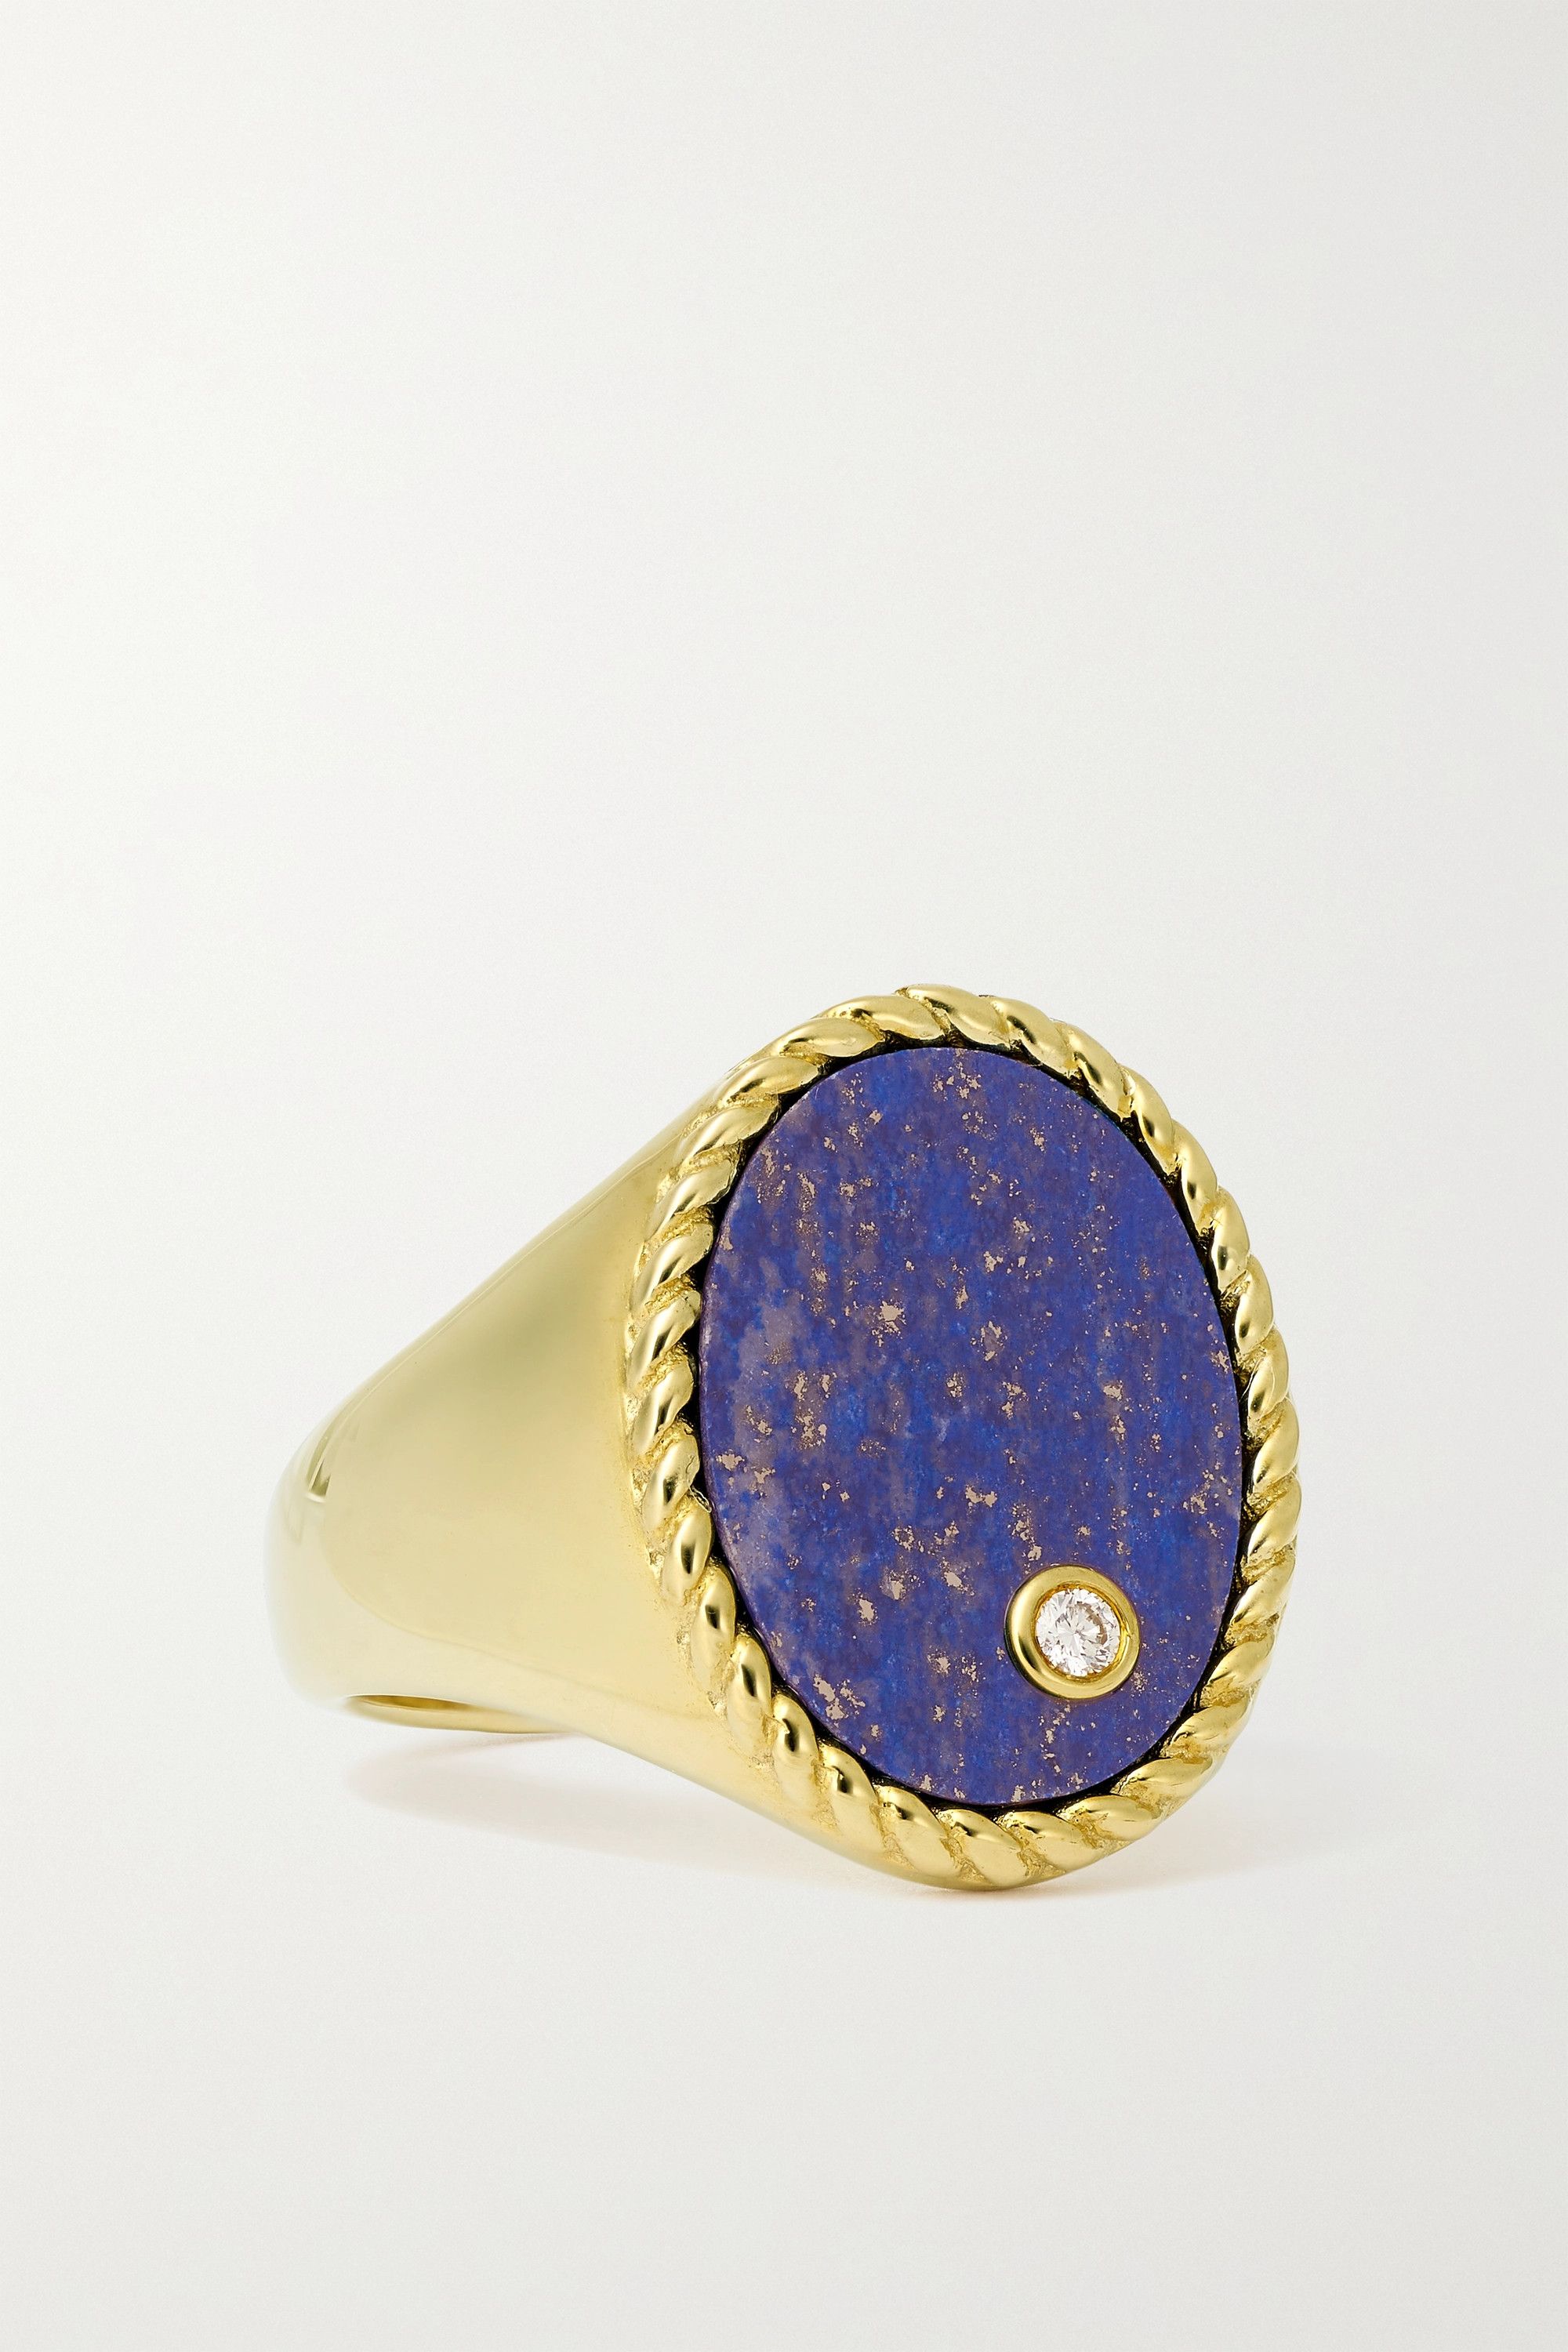 9-karat gold, lapis lazuli and diamond ring